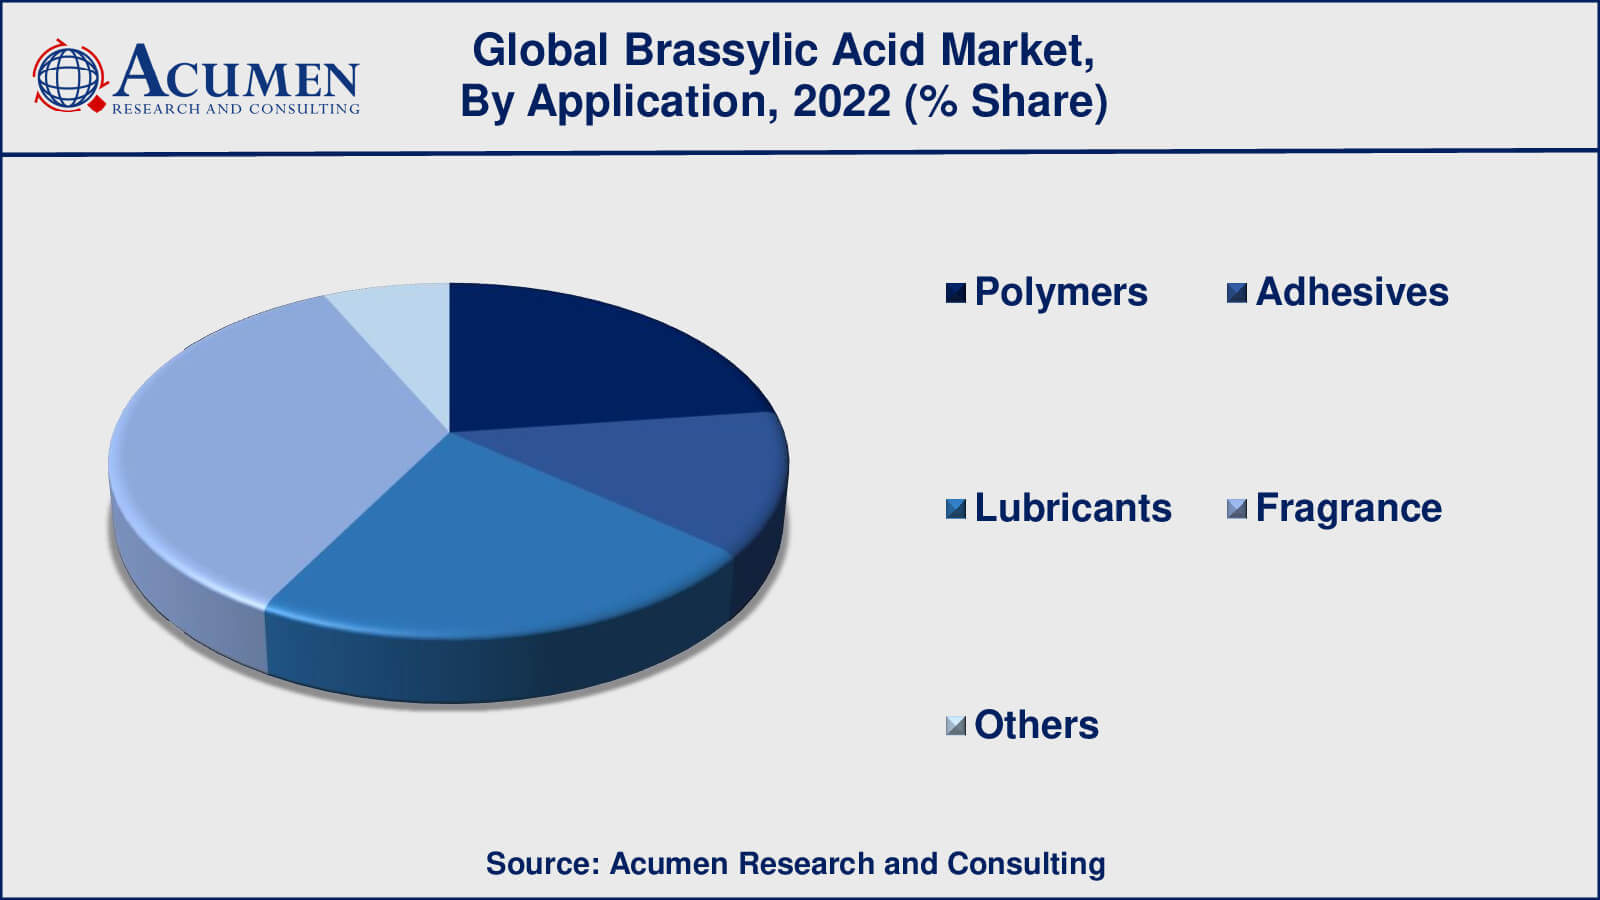 Brassylic Acid Market Drivers